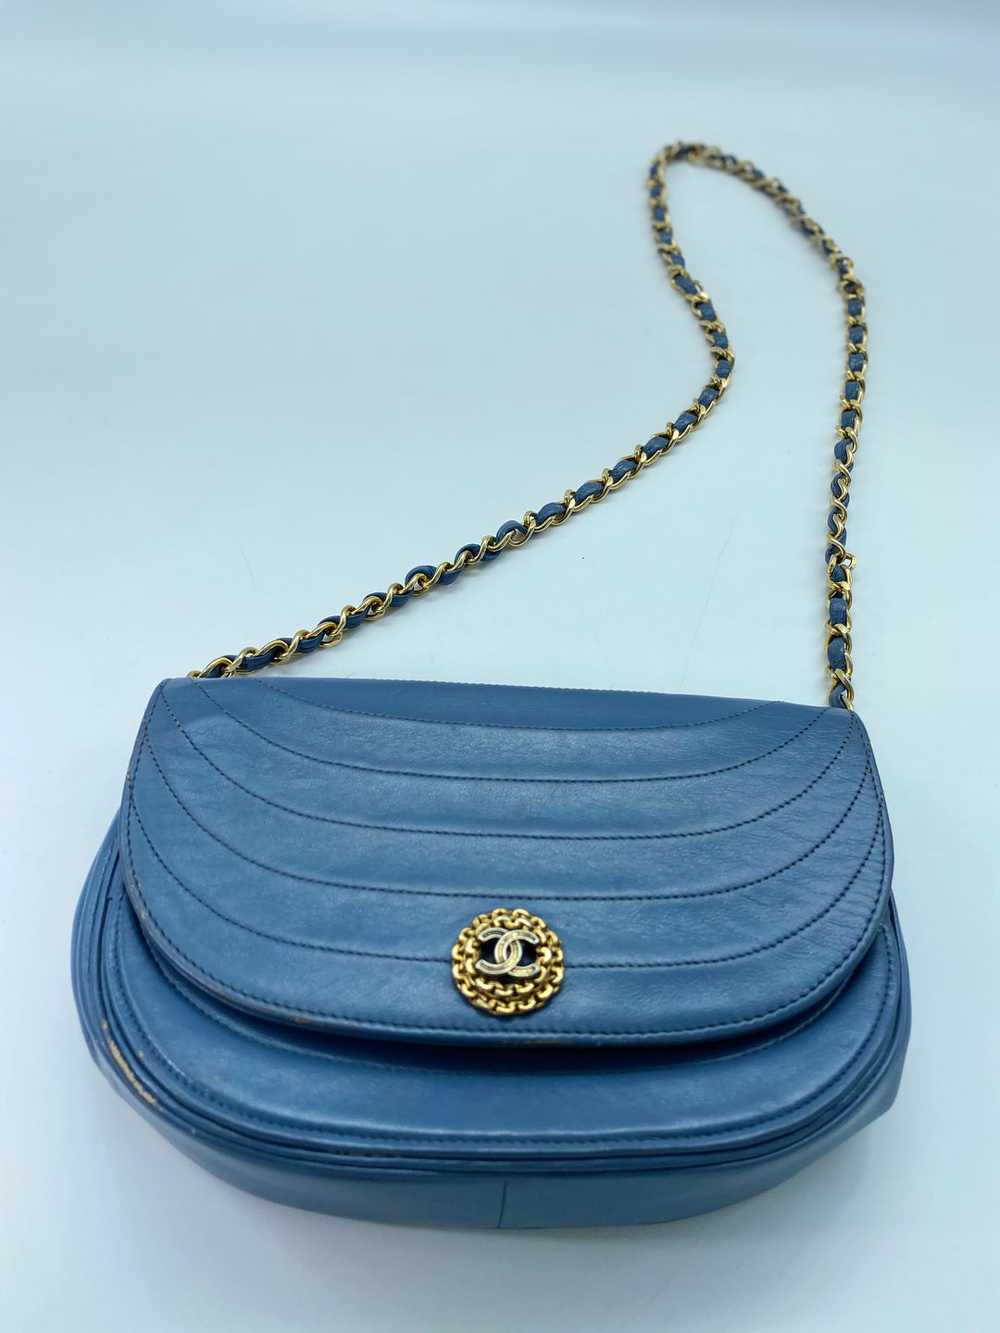 Chanel Blue Lambskin Flap Bag - image 3